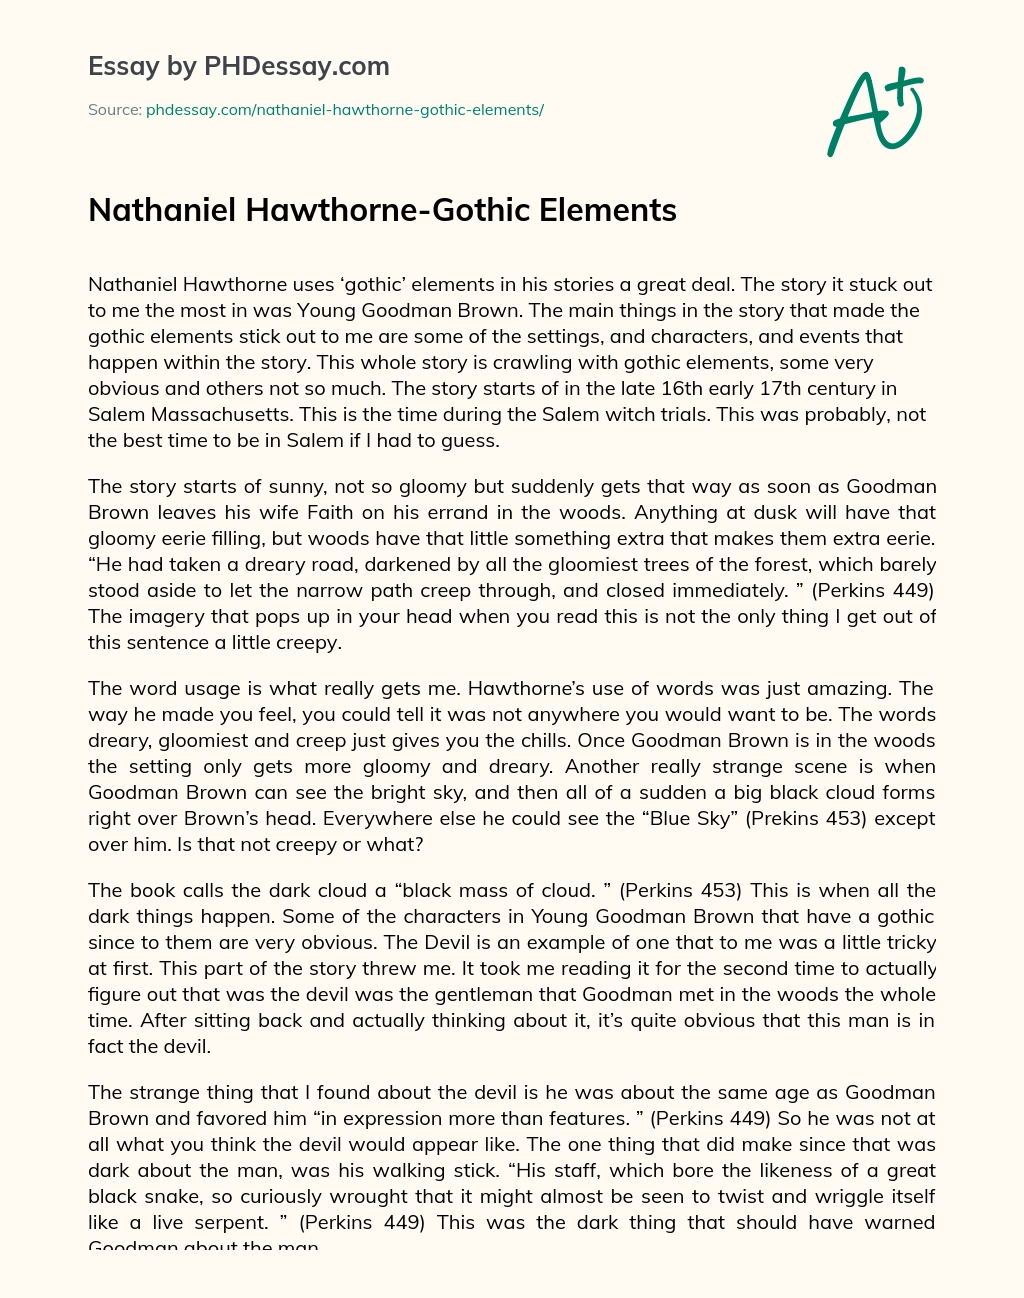 Nathaniel Hawthorne-Gothic Elements essay